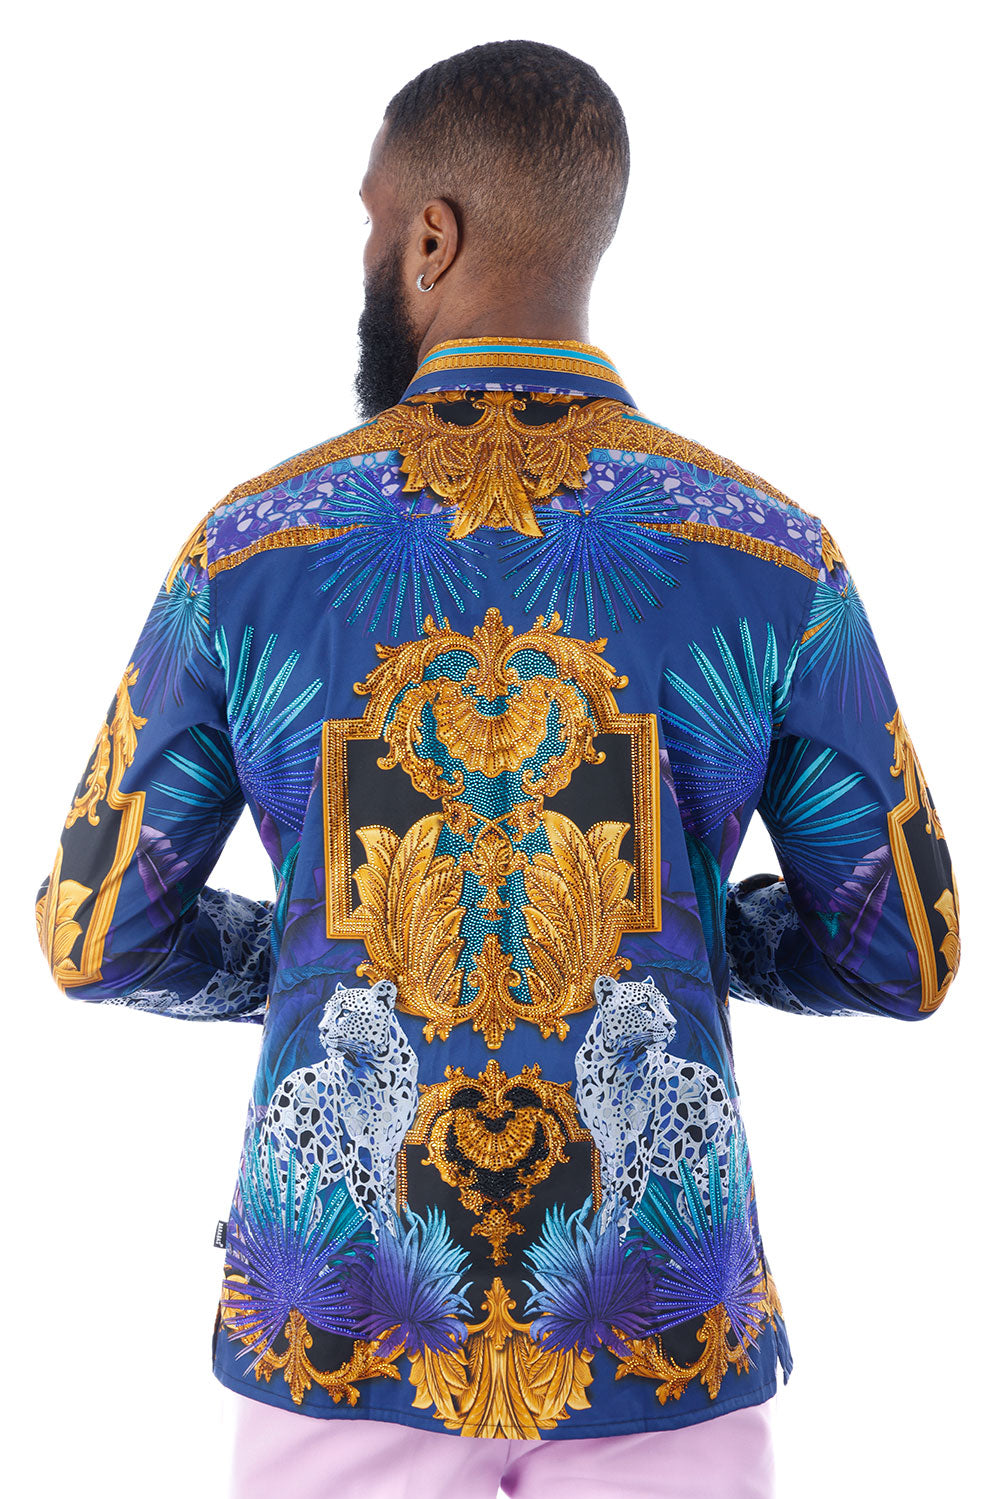 BARABAS Men's Rhinestone Floral Baroque Long Sleeve Shirts 3SPR437 Blue